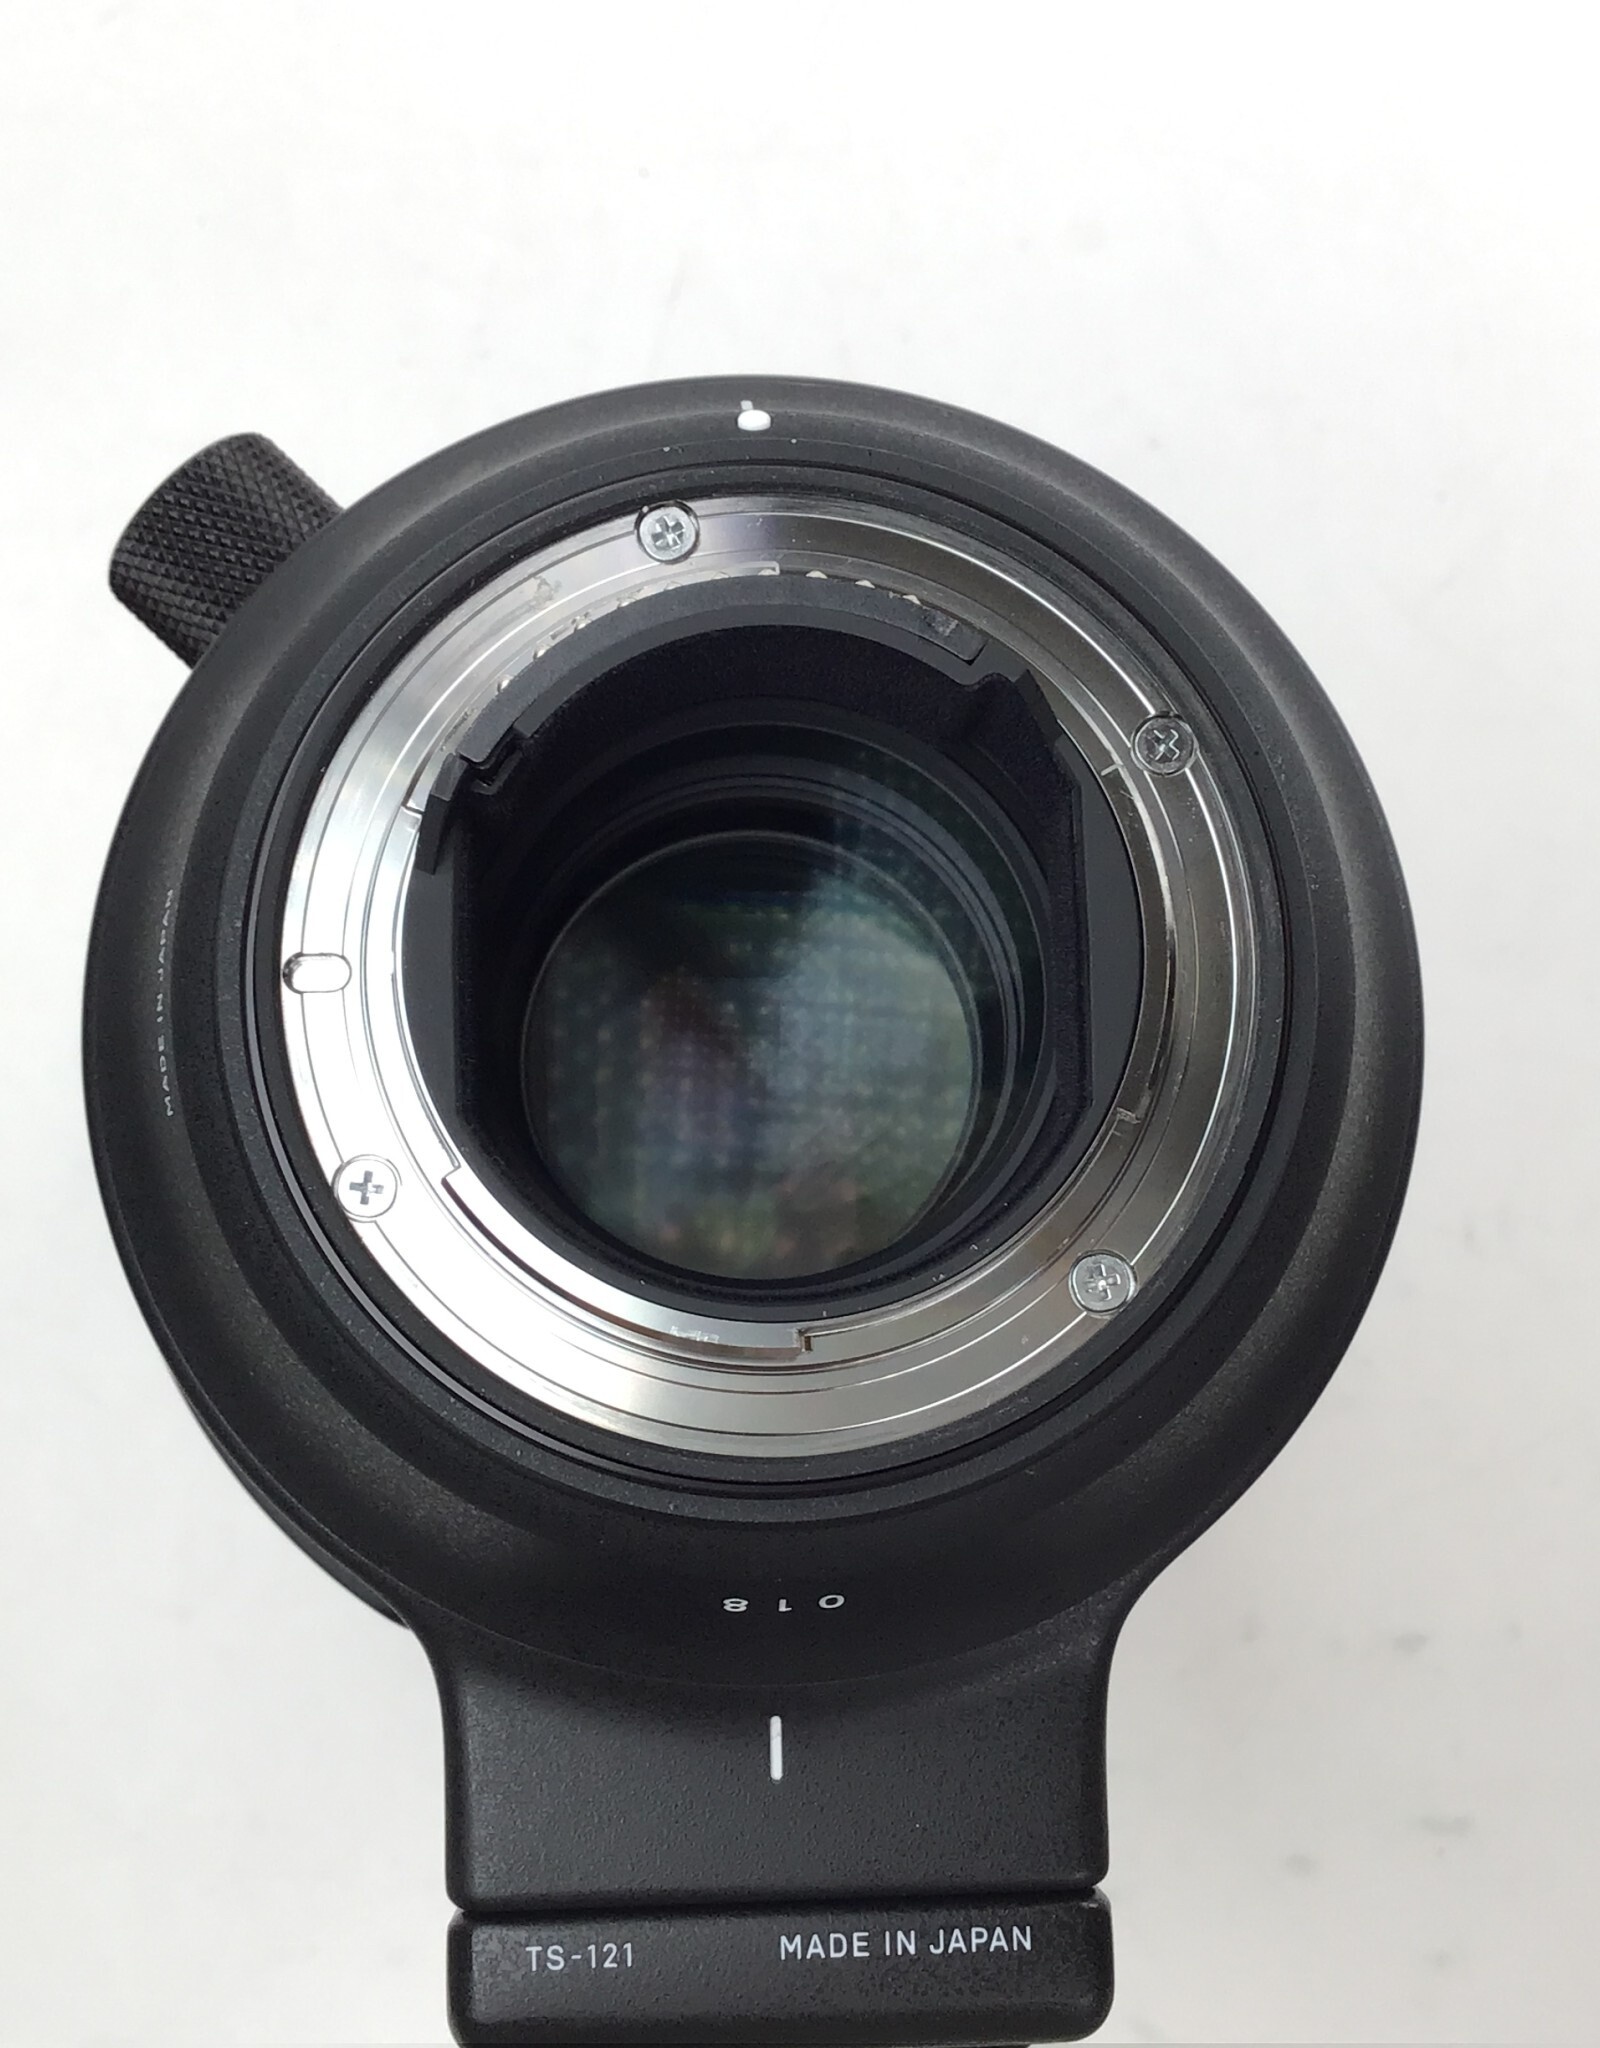 NIKON Sigma 70-200mm f2.8 DG OS HSM Lens for Nikon Used EX